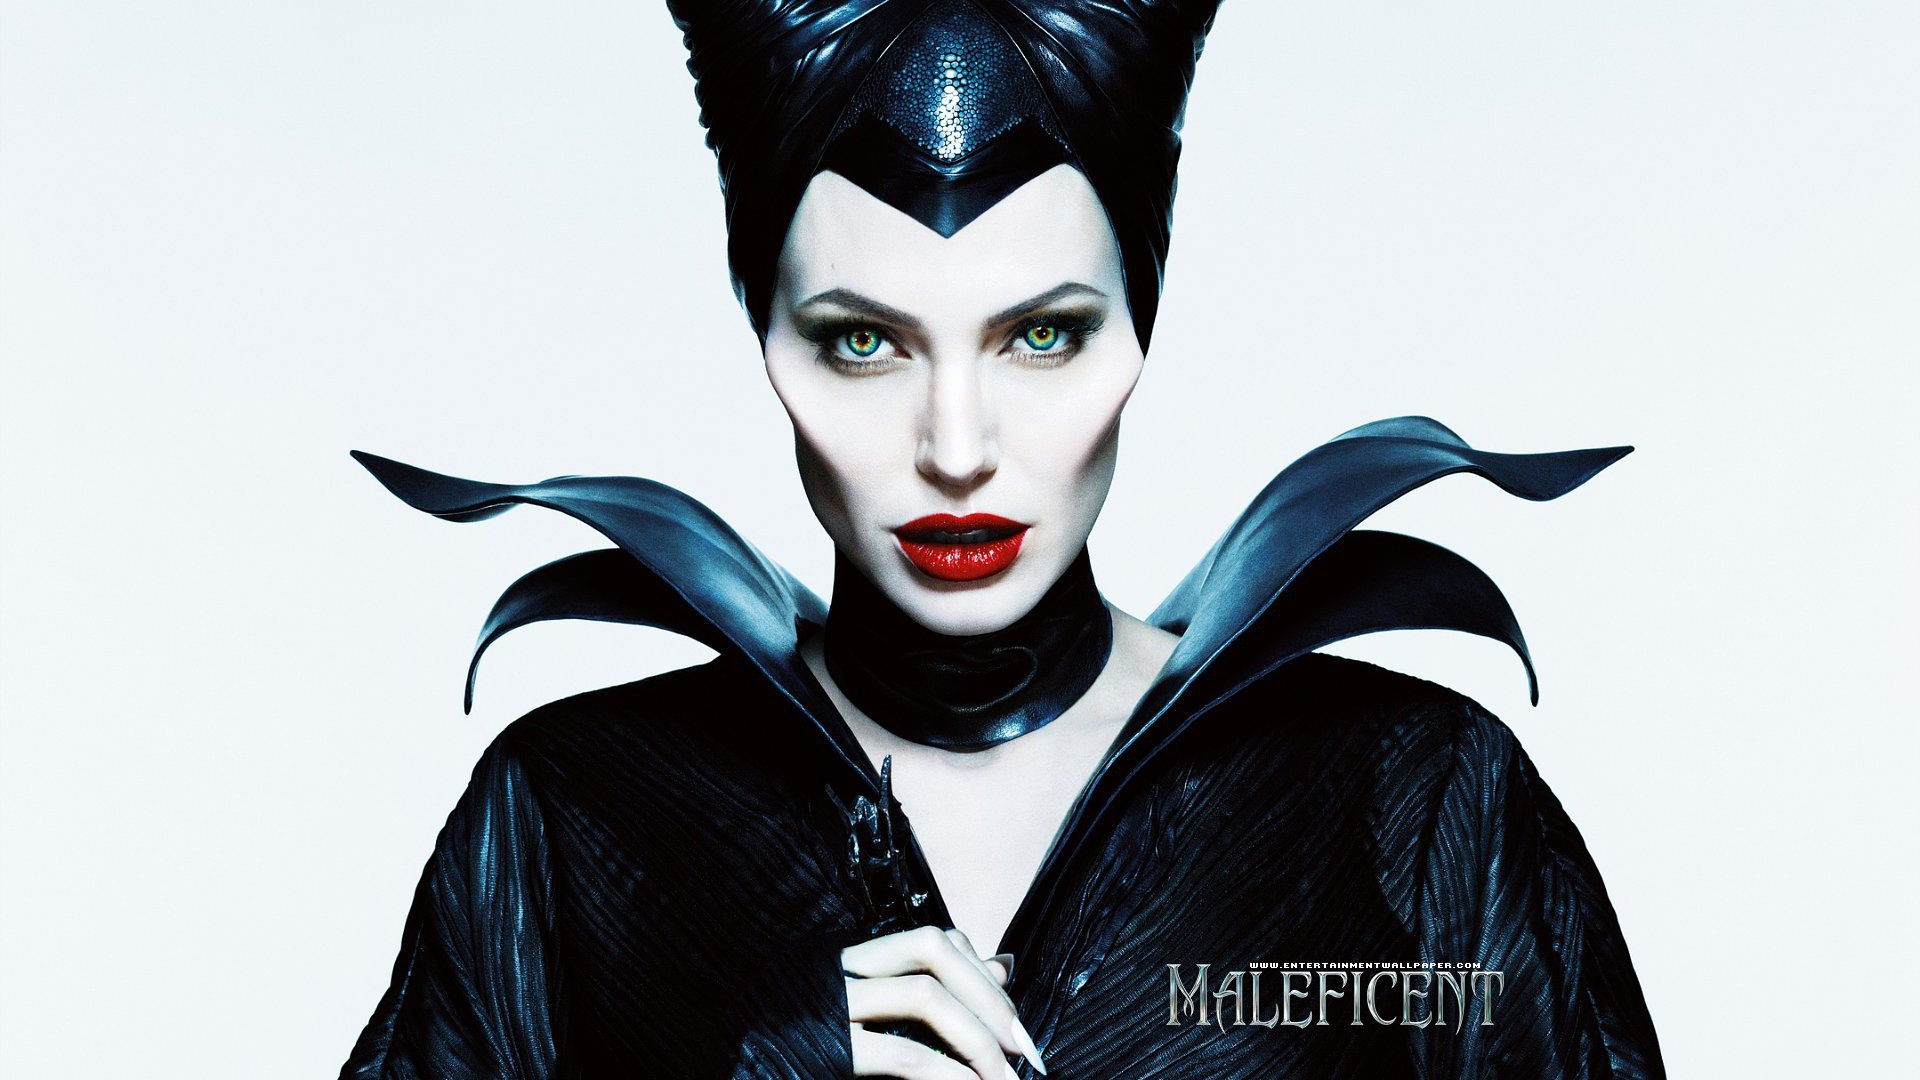 Maleficent обои 2014 HD кино #13 - 1920x1080